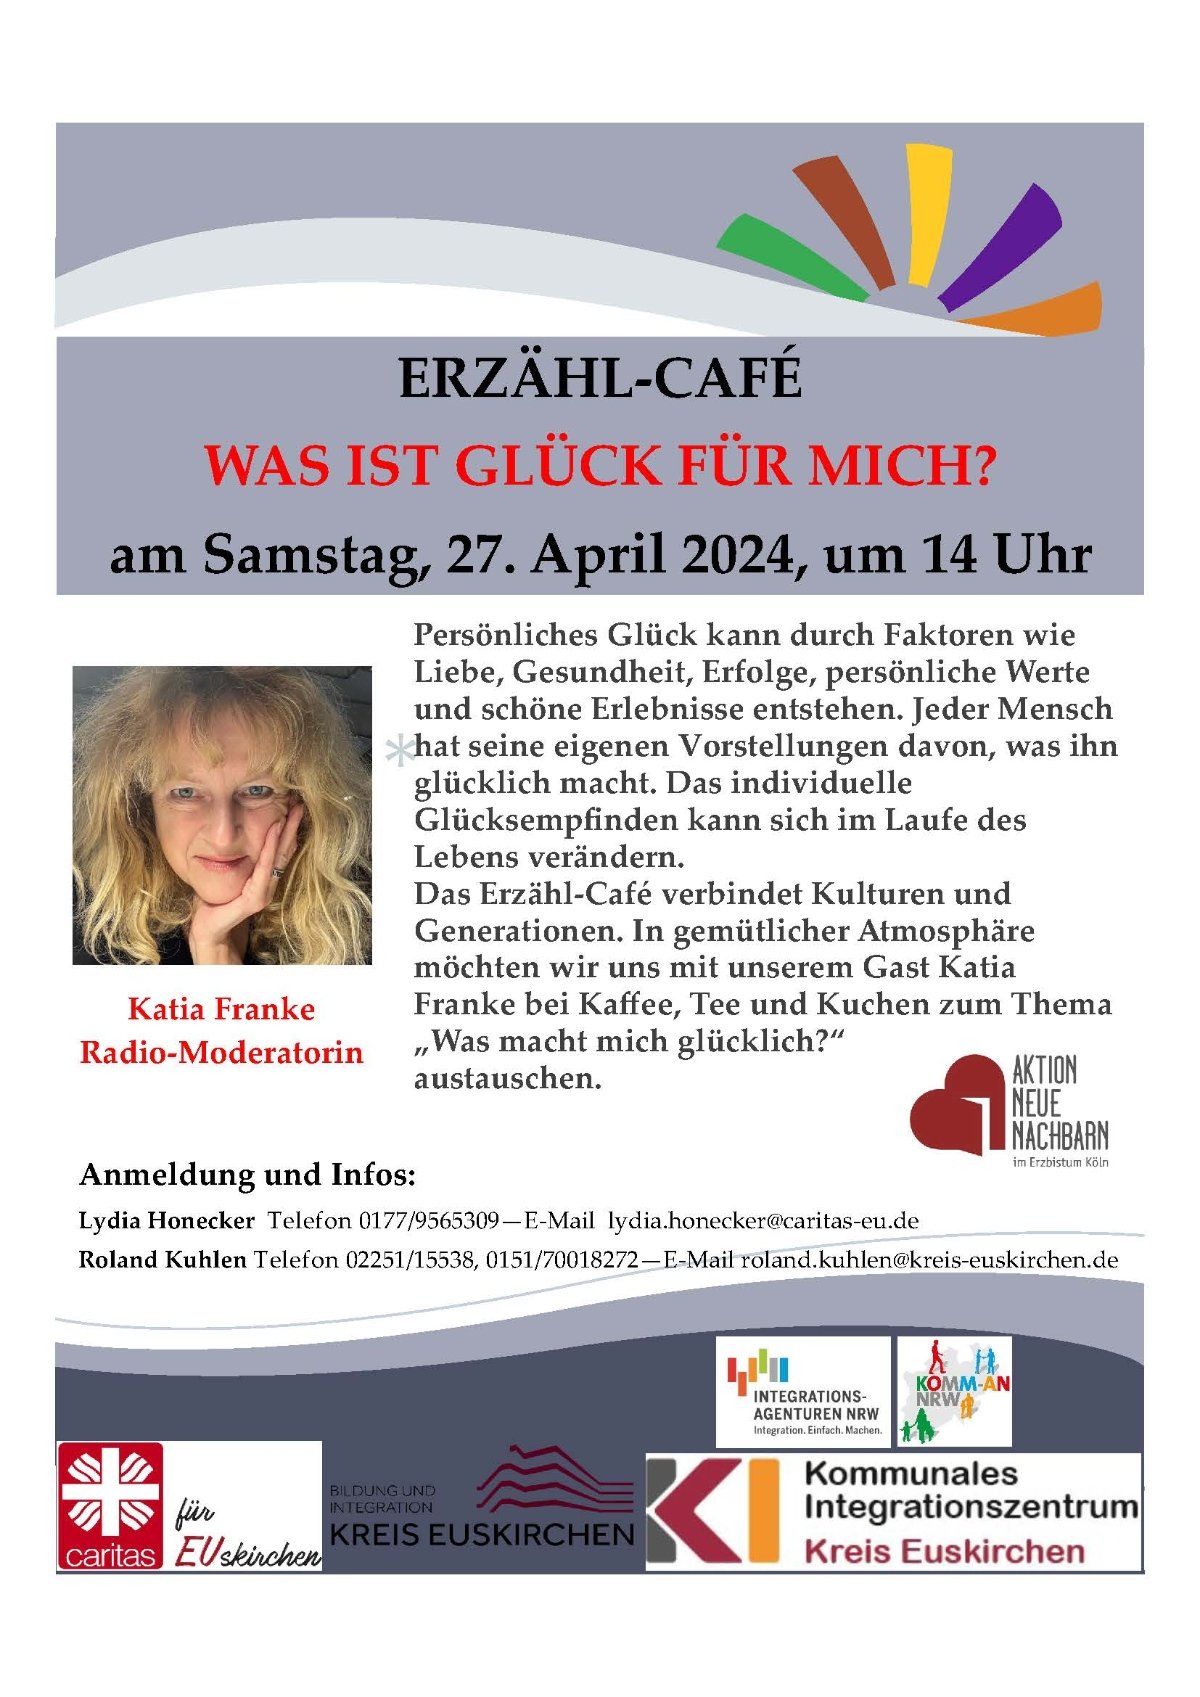 Erzähl-Café mit Katia Franke 27.04.2024 (c) Caritasverband Euskirchen Martina Schneider